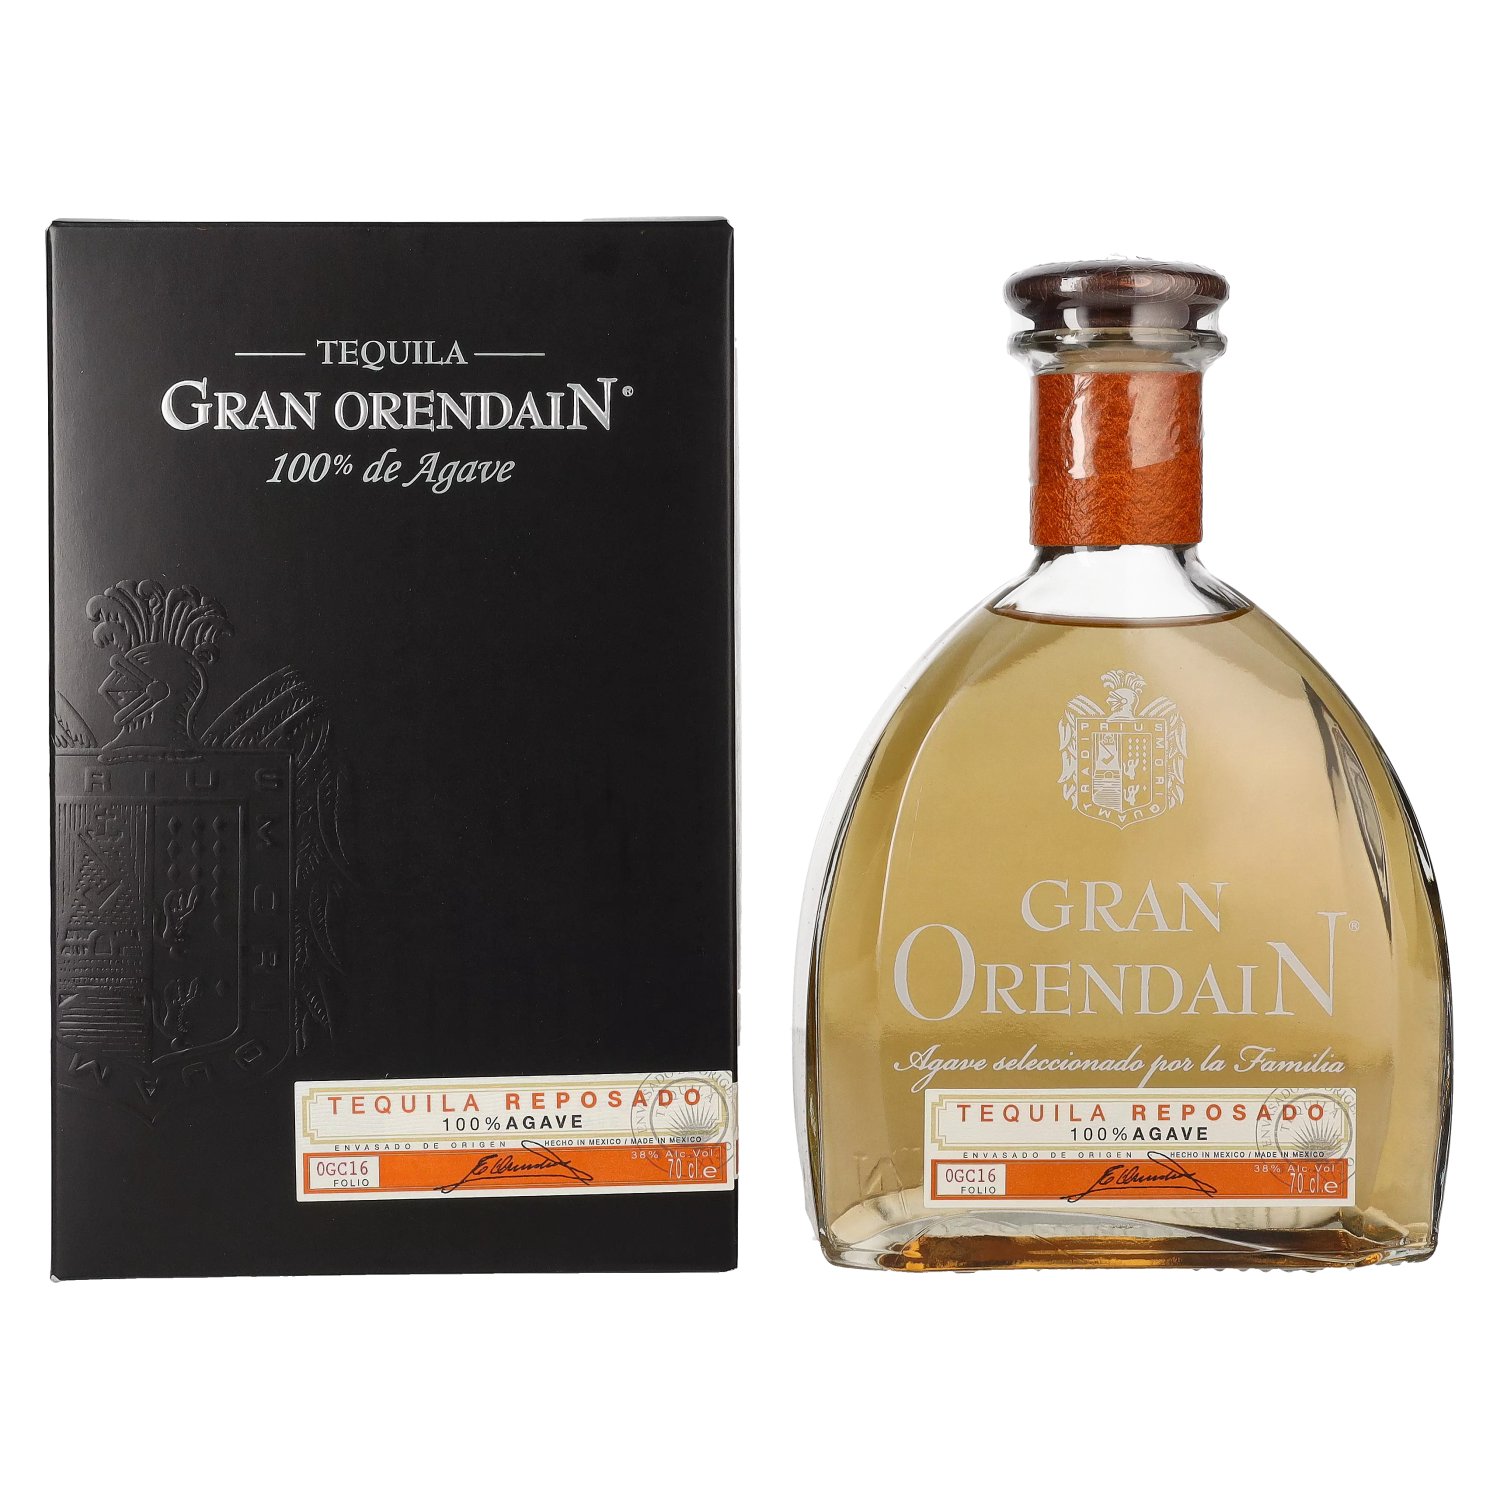 Gran Orendain Tequila REPOSADO 100% Agave 38% Vol. 0,7l in Giftbox